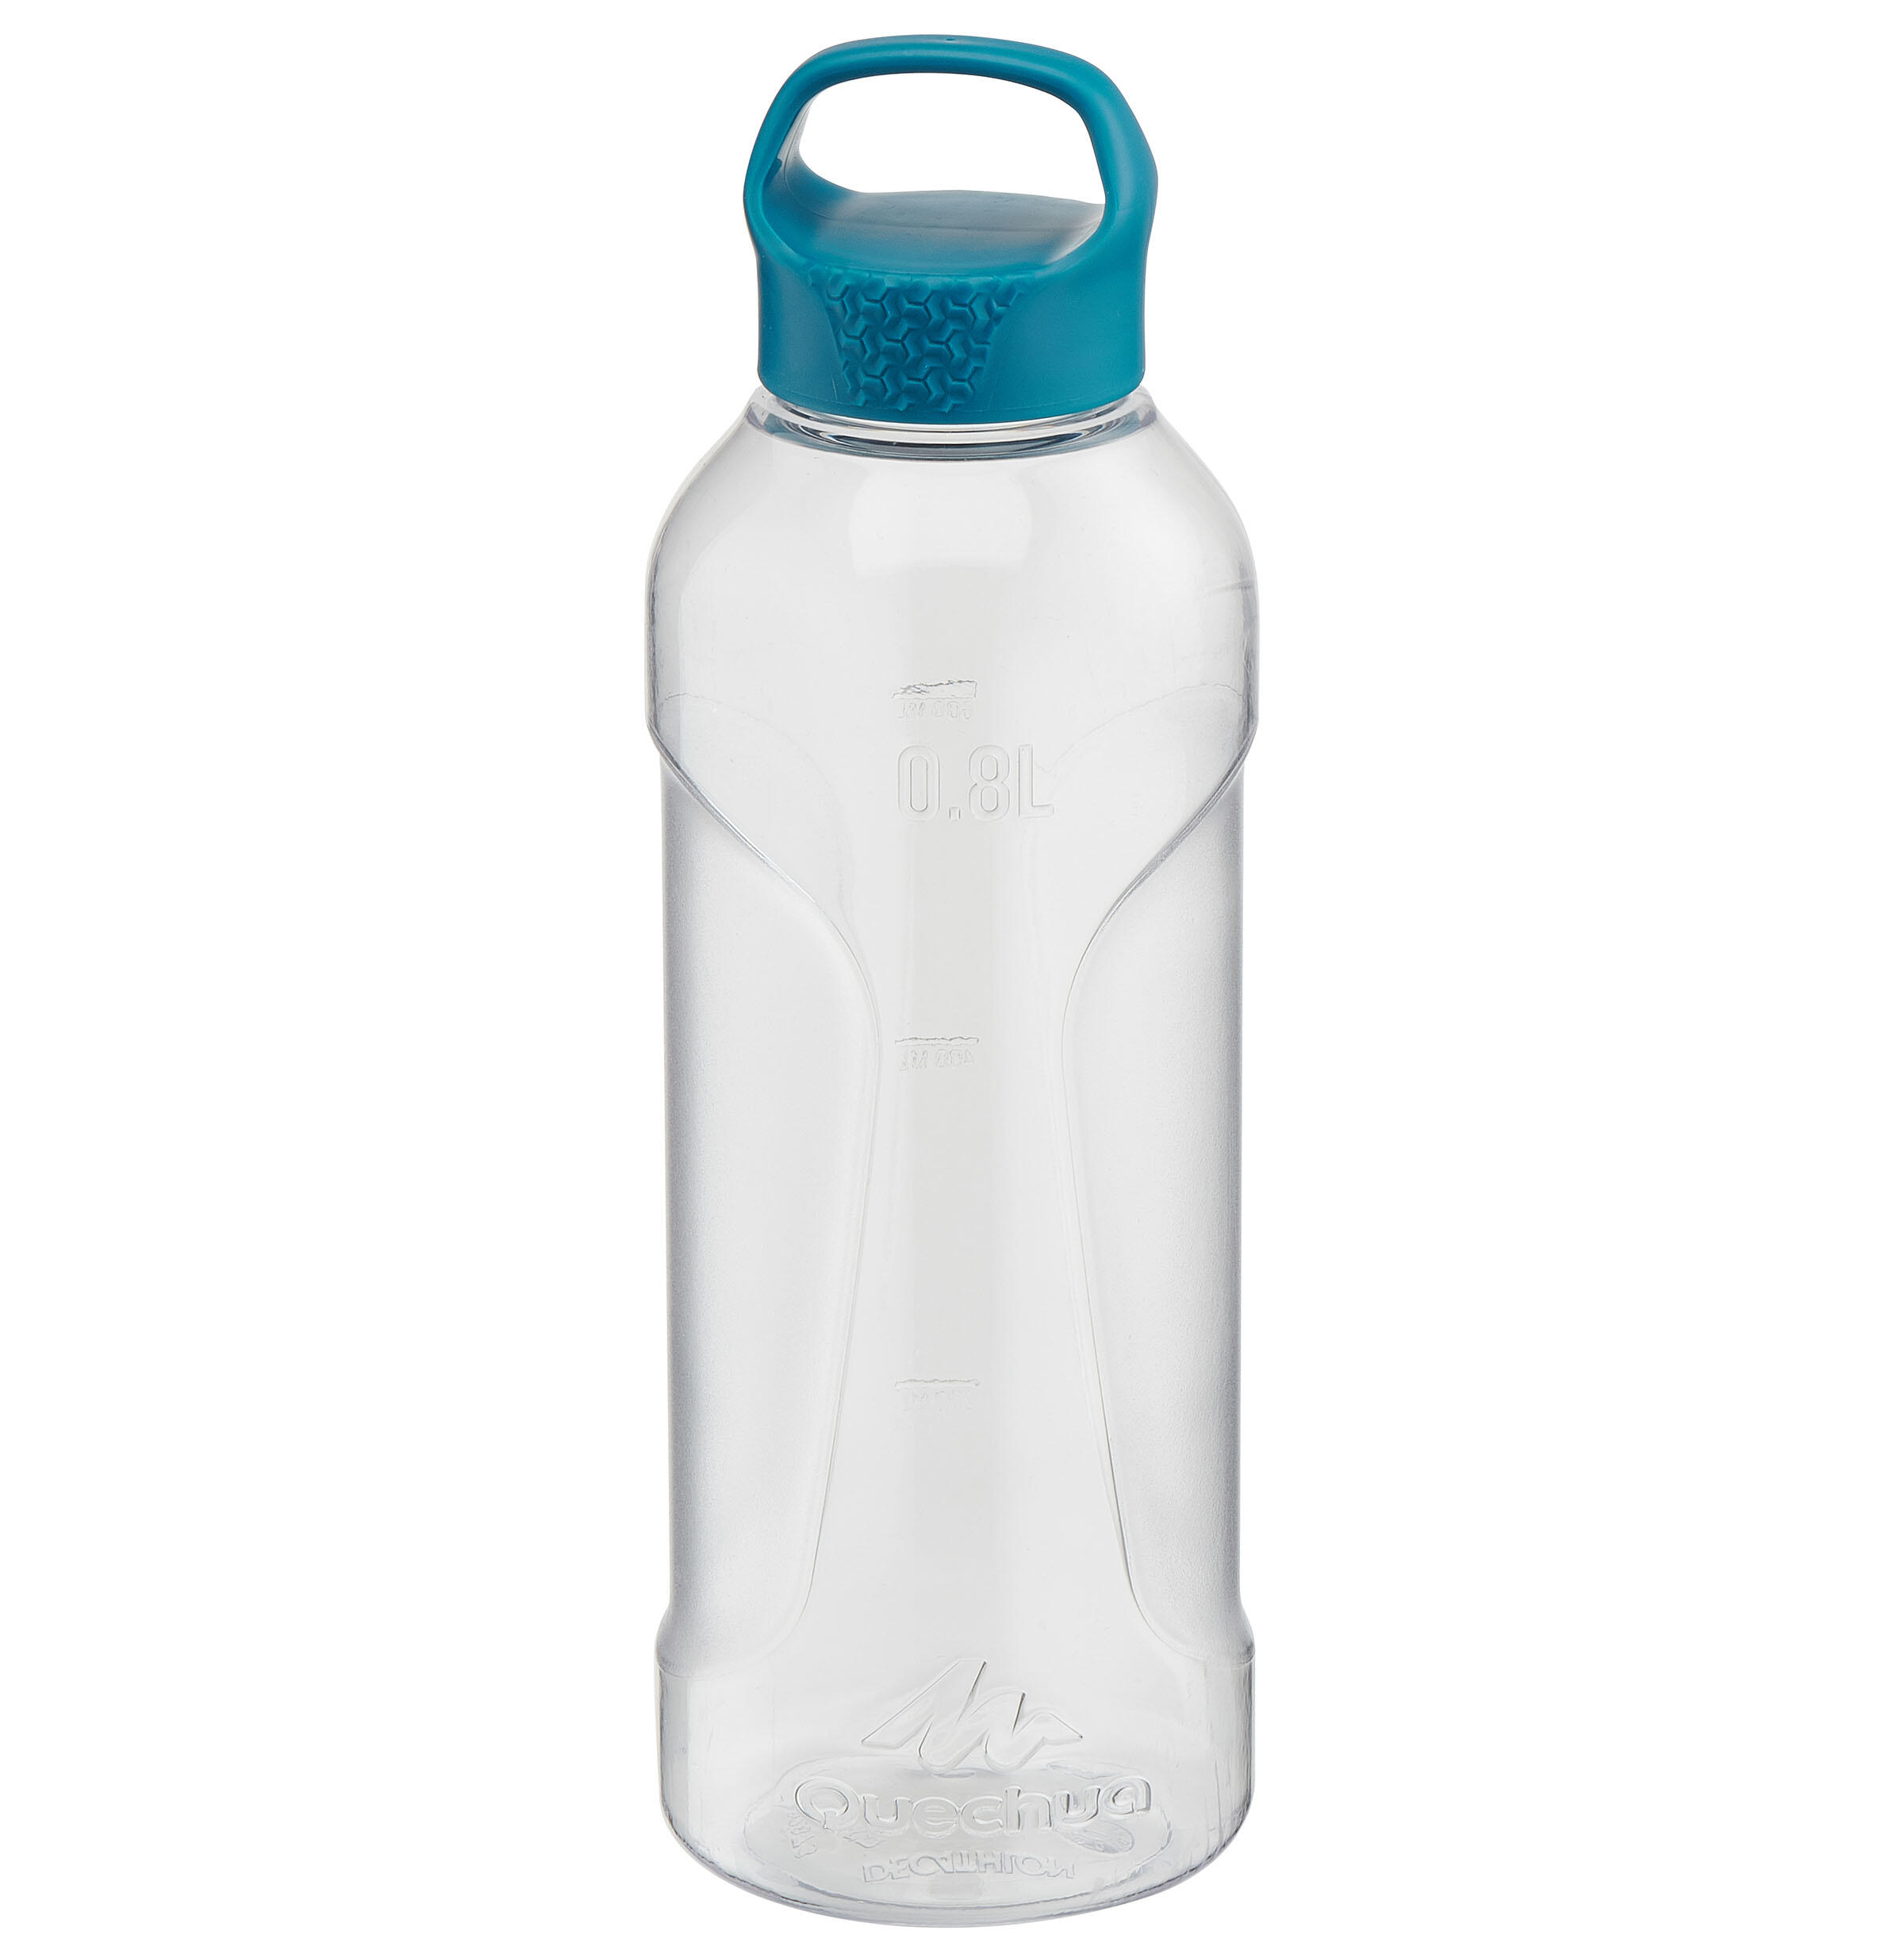 decathlon water bottles price